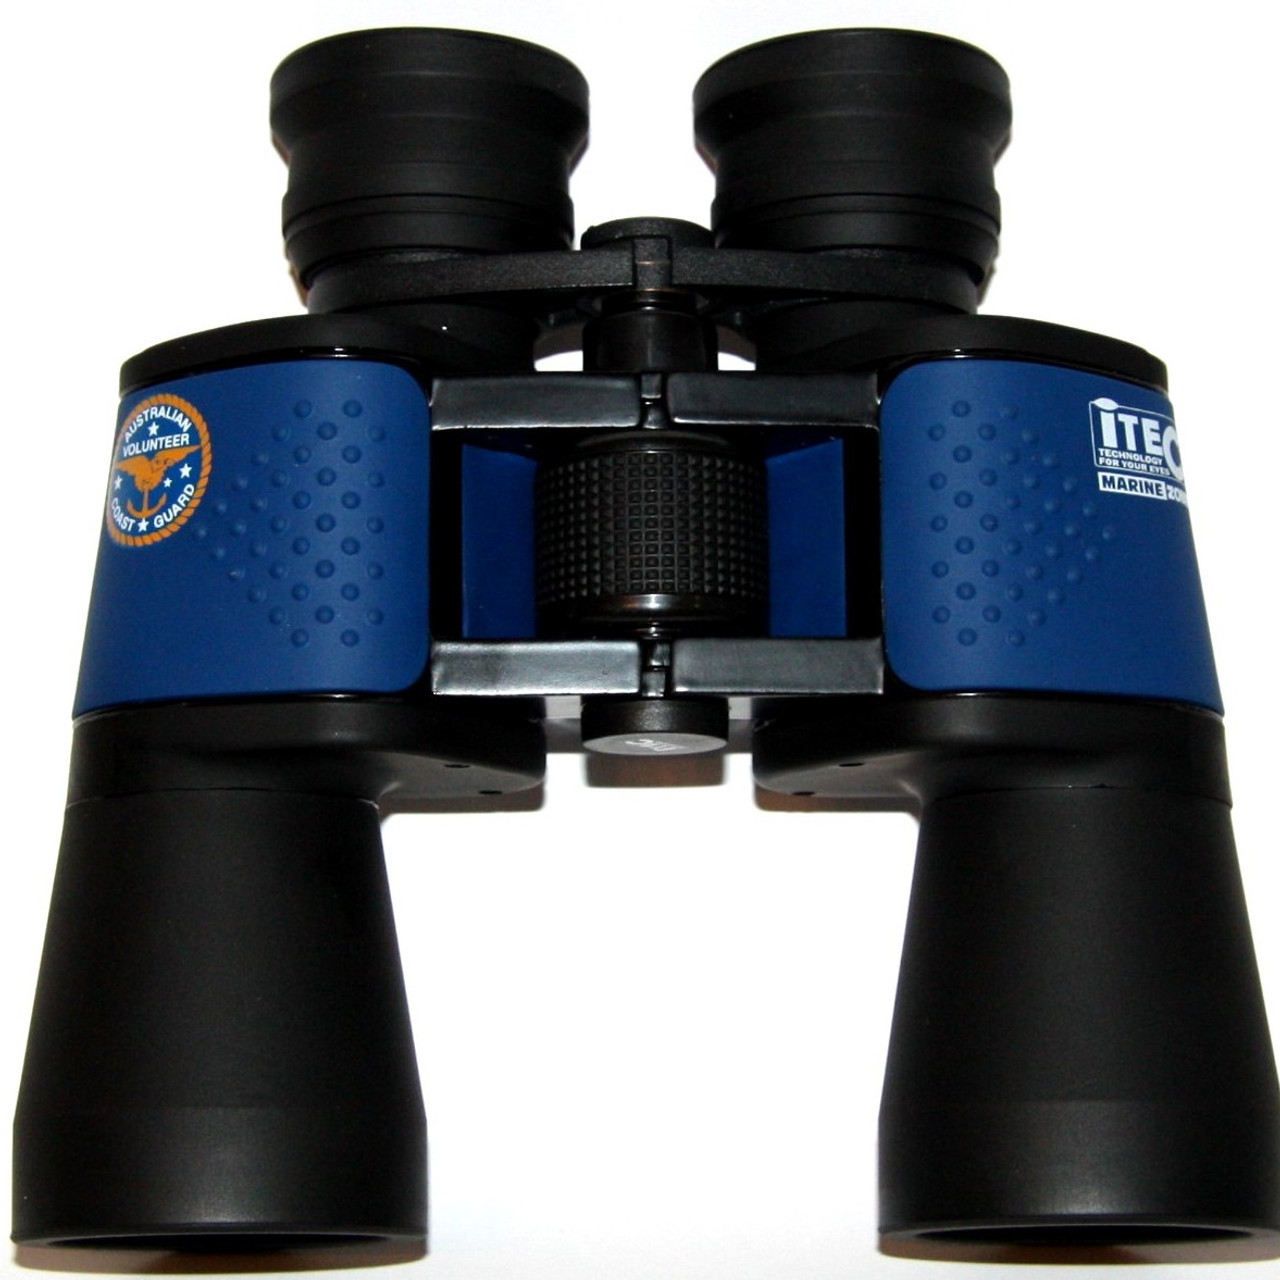 Binocular 7x50 Centre Focus Itec Aust Coast Guard Marine Waterproof